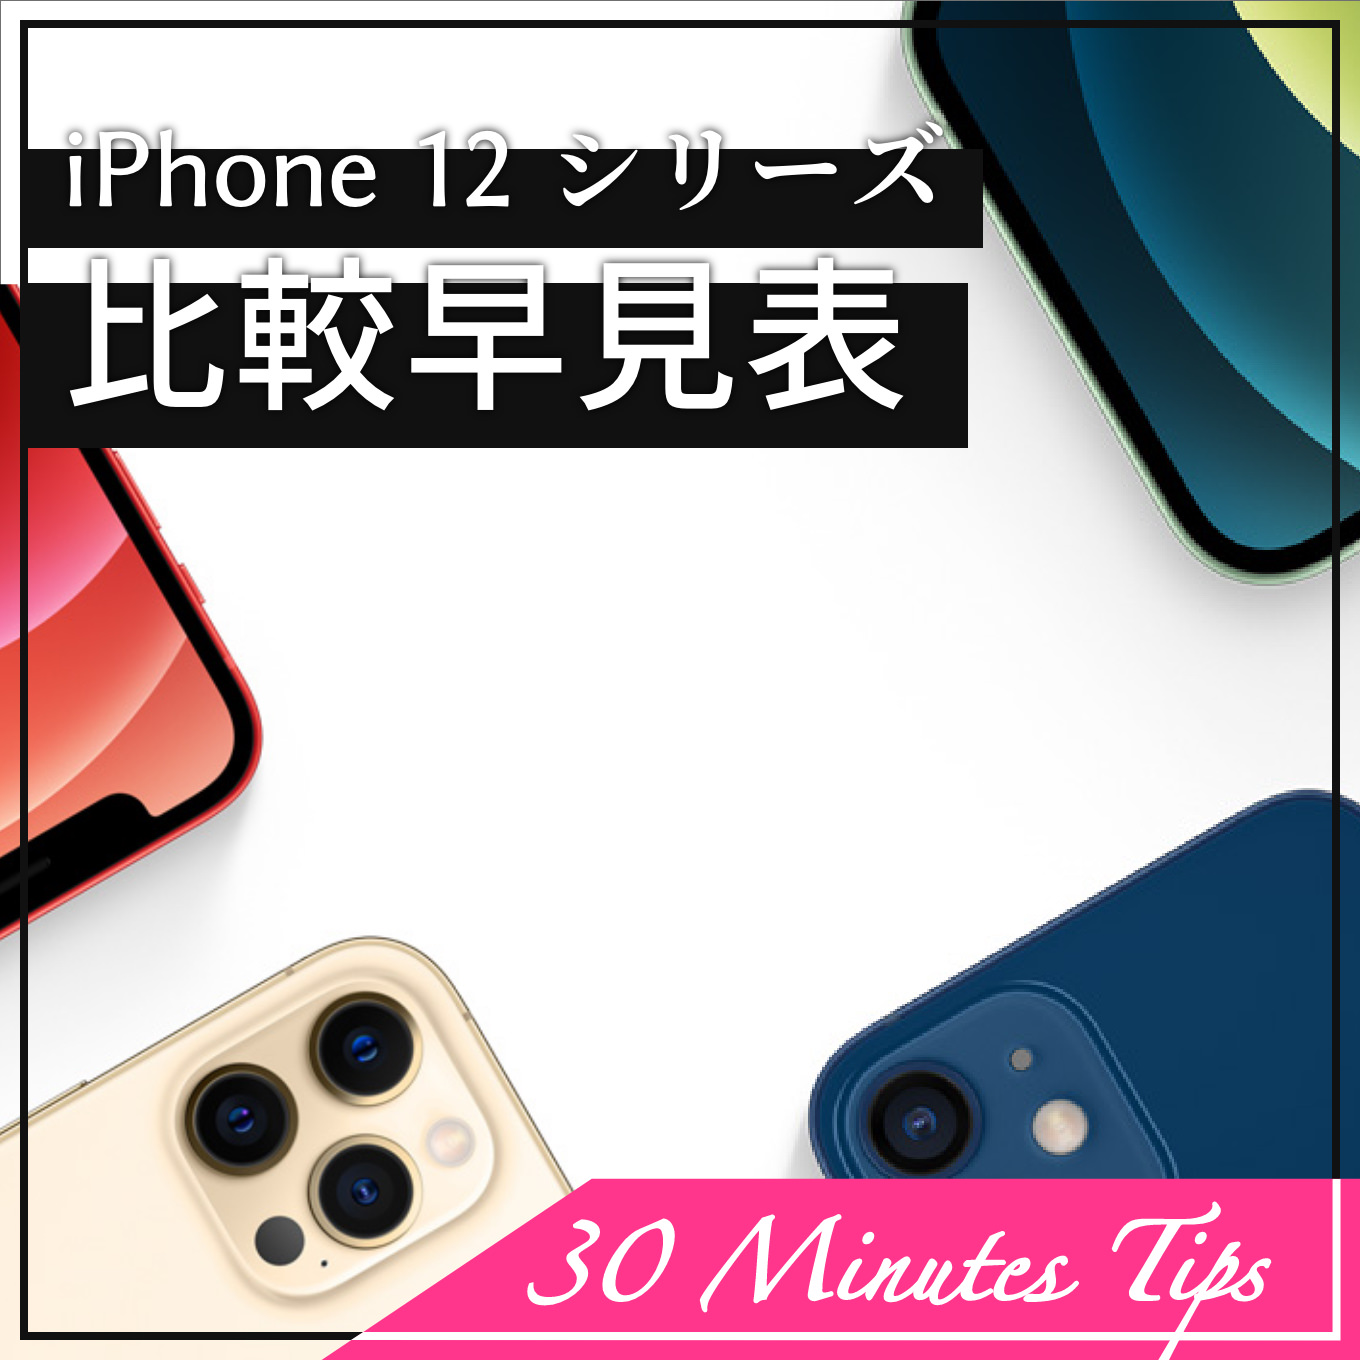 iphone12-hikaku-hayami